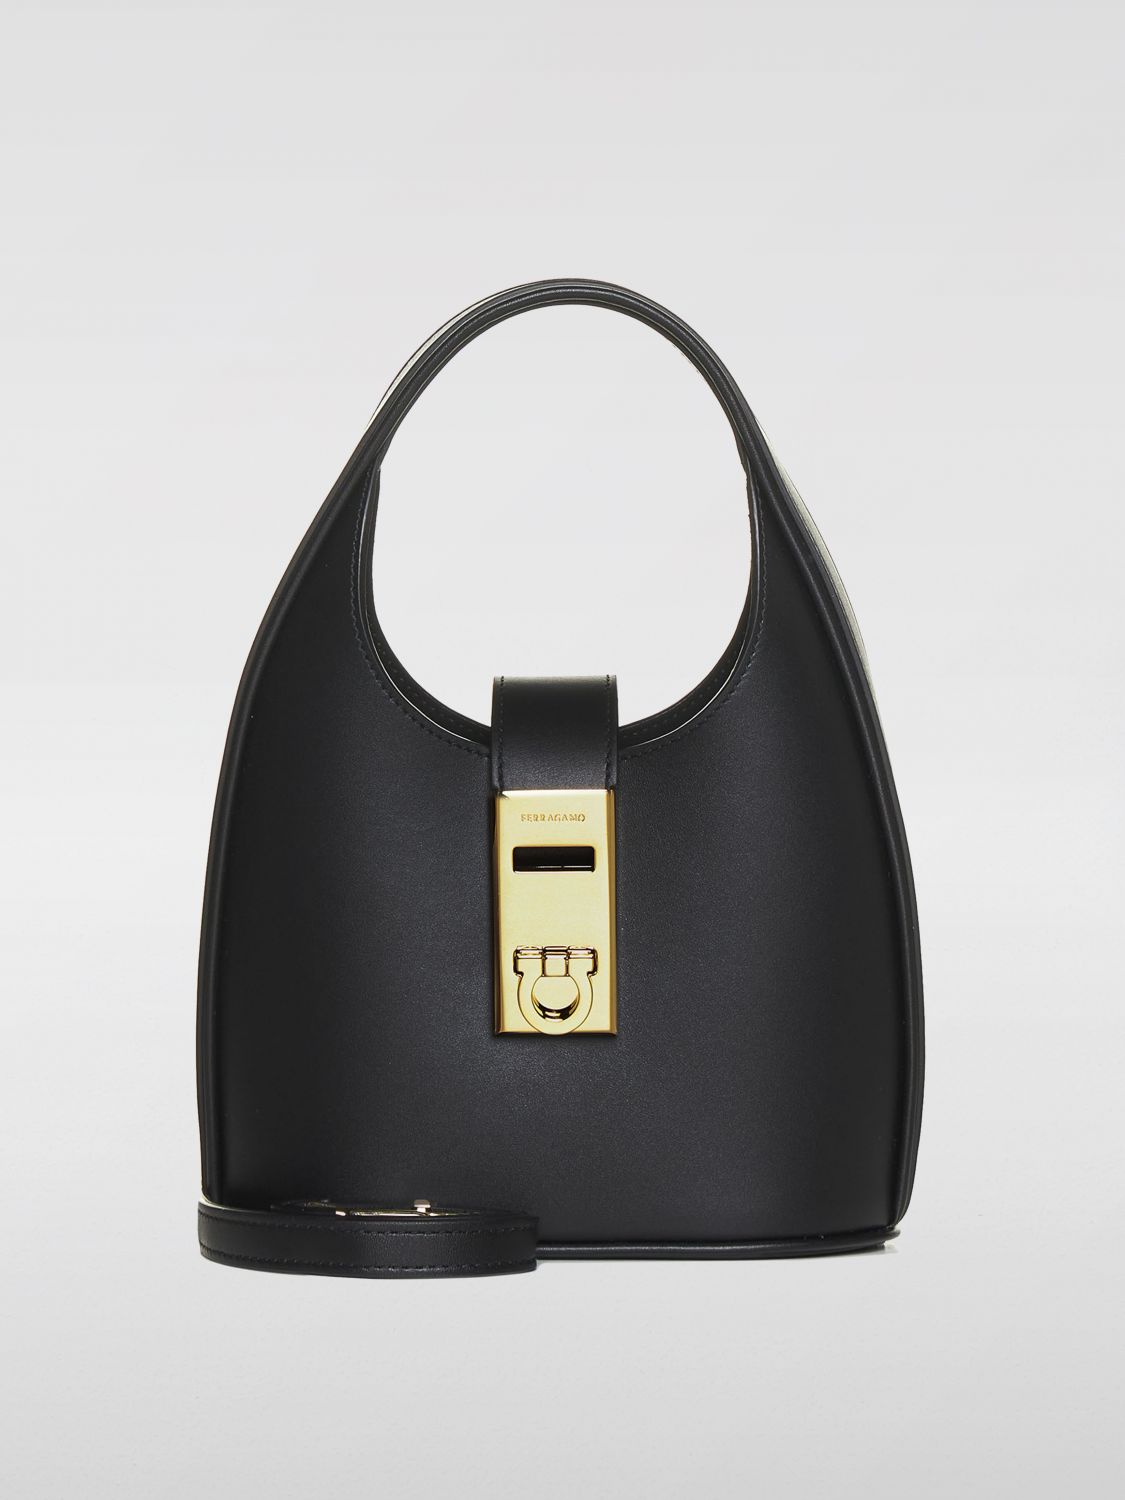 Ferragamo Black Leather Medium Hobo Handbag